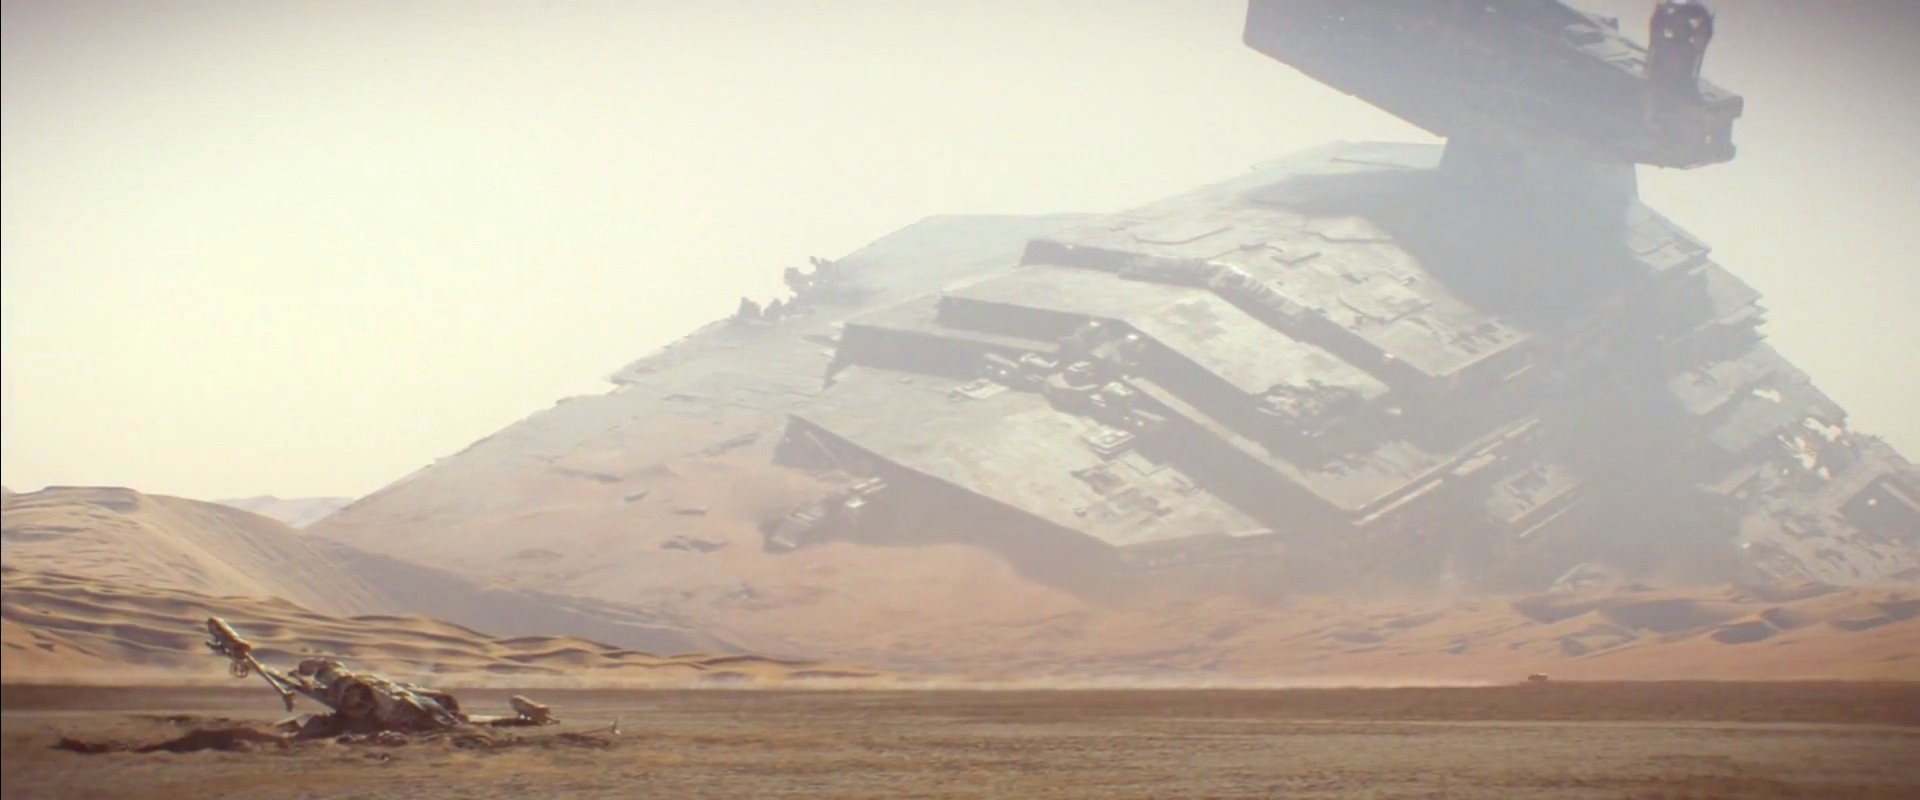 Star Wars 'The Force Awakens' desktop wallpaper-able stills from ...